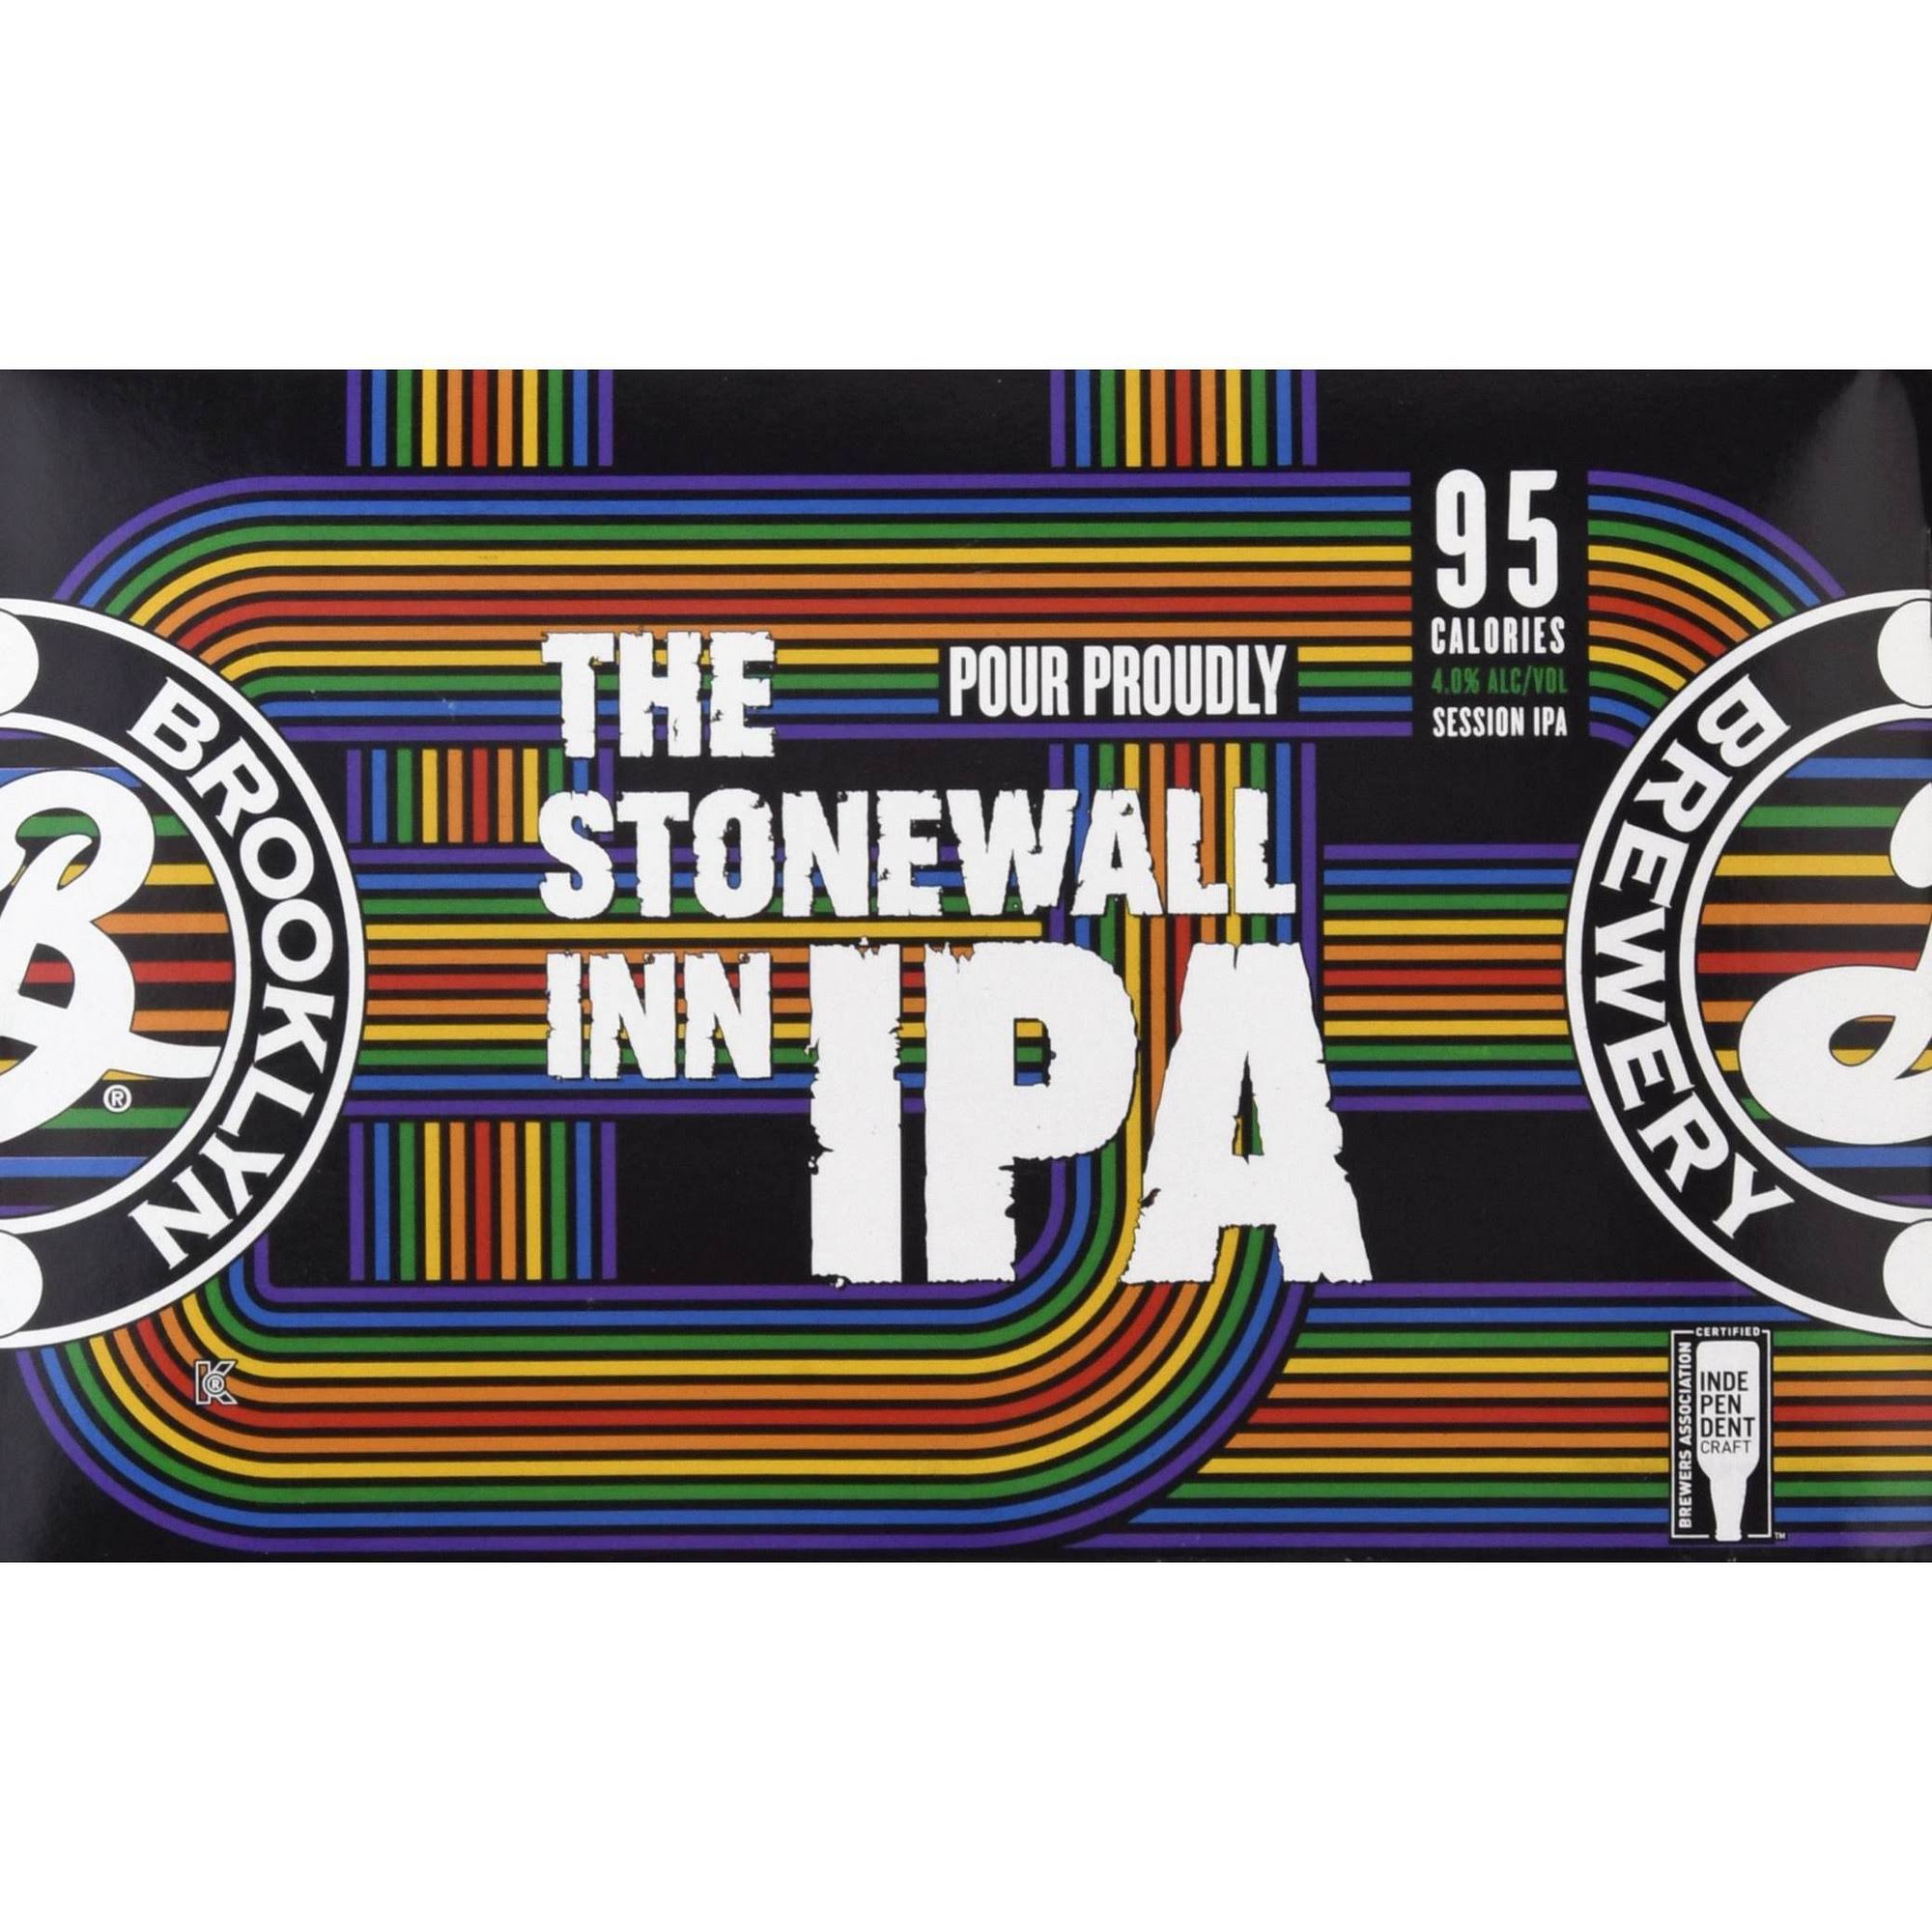 Brooklyn Brewery Beer, IPA, The Stonewall Inn